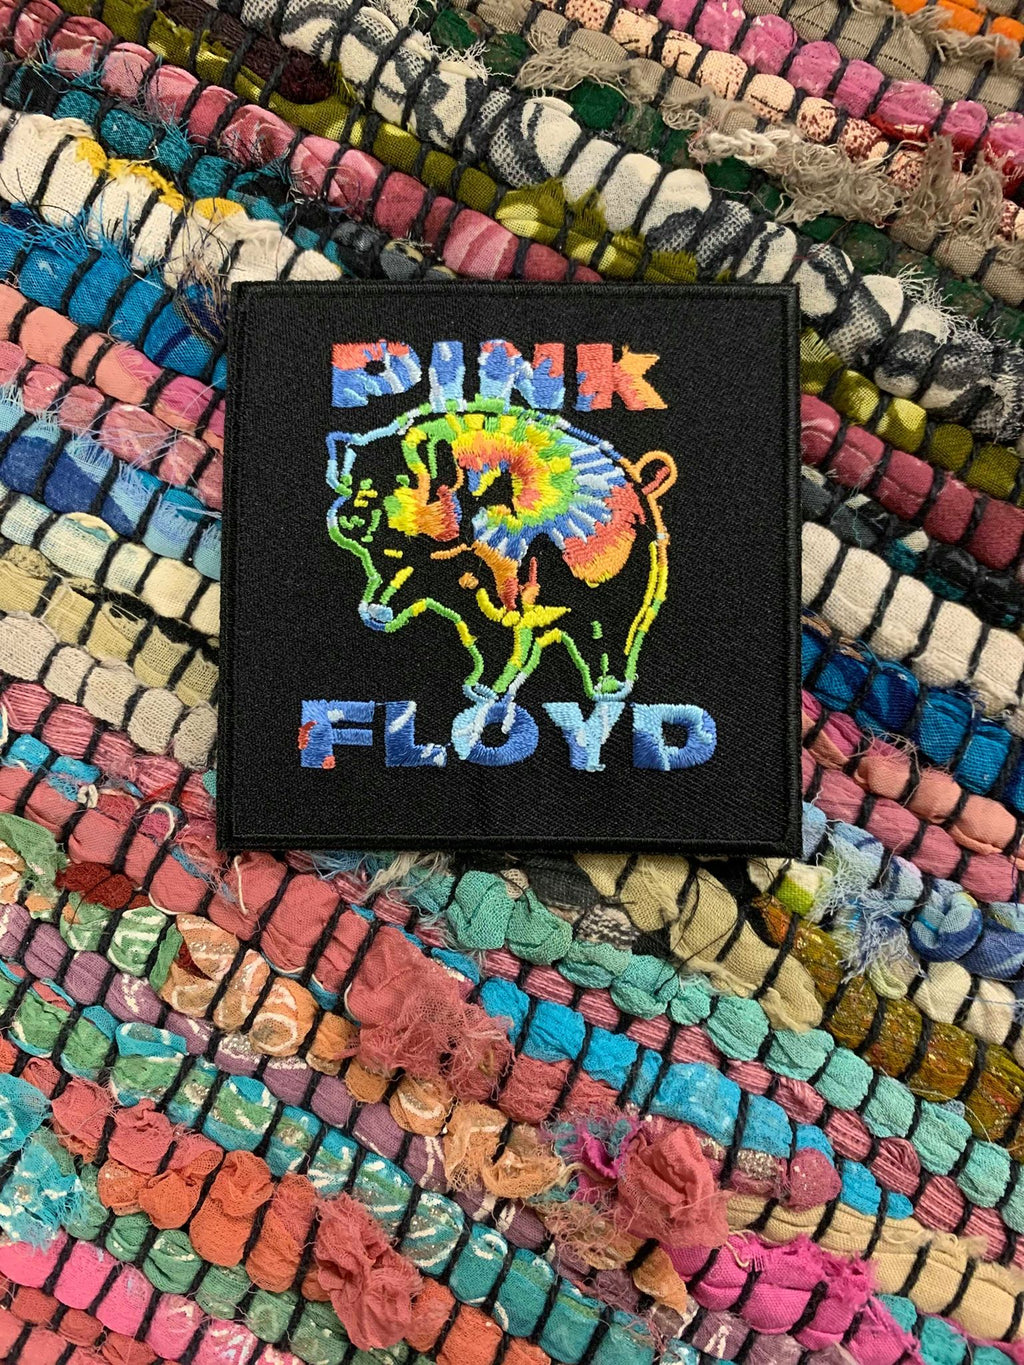 Pink Floyd - Pig